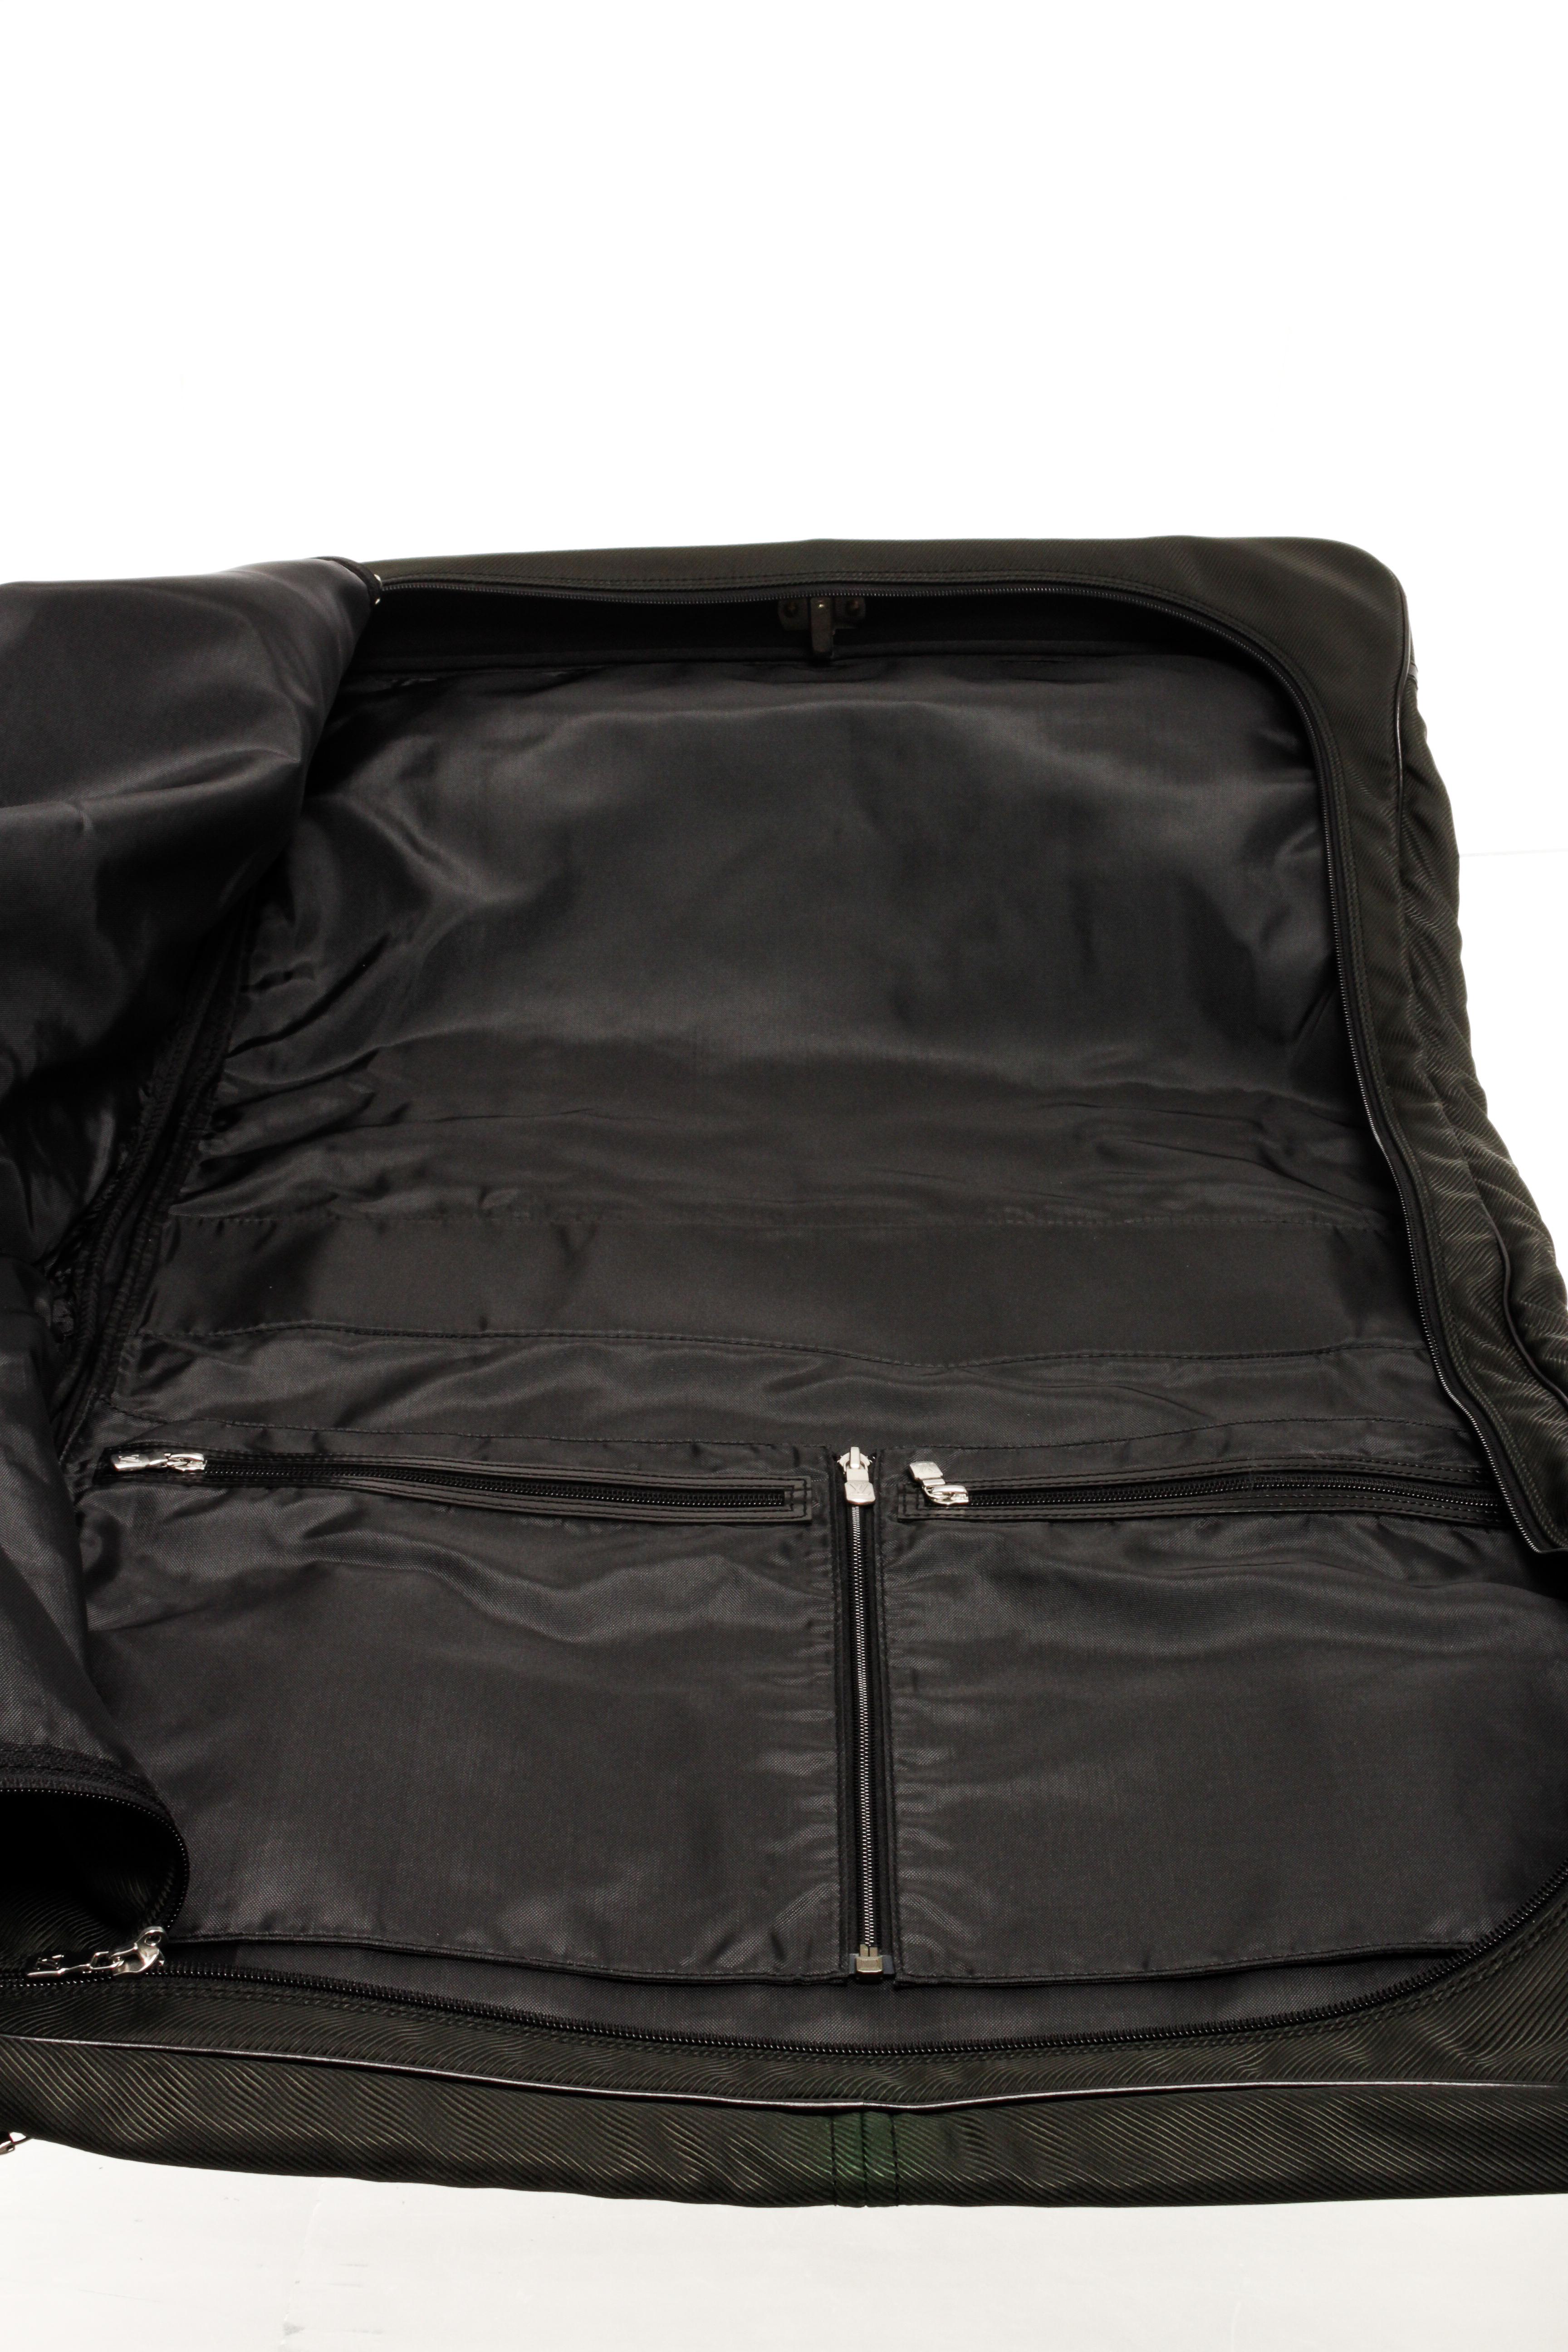 Louis Vuitton Black Nylon and Taiga Leather Portable Gibeciere Travel Bag For Sale 6